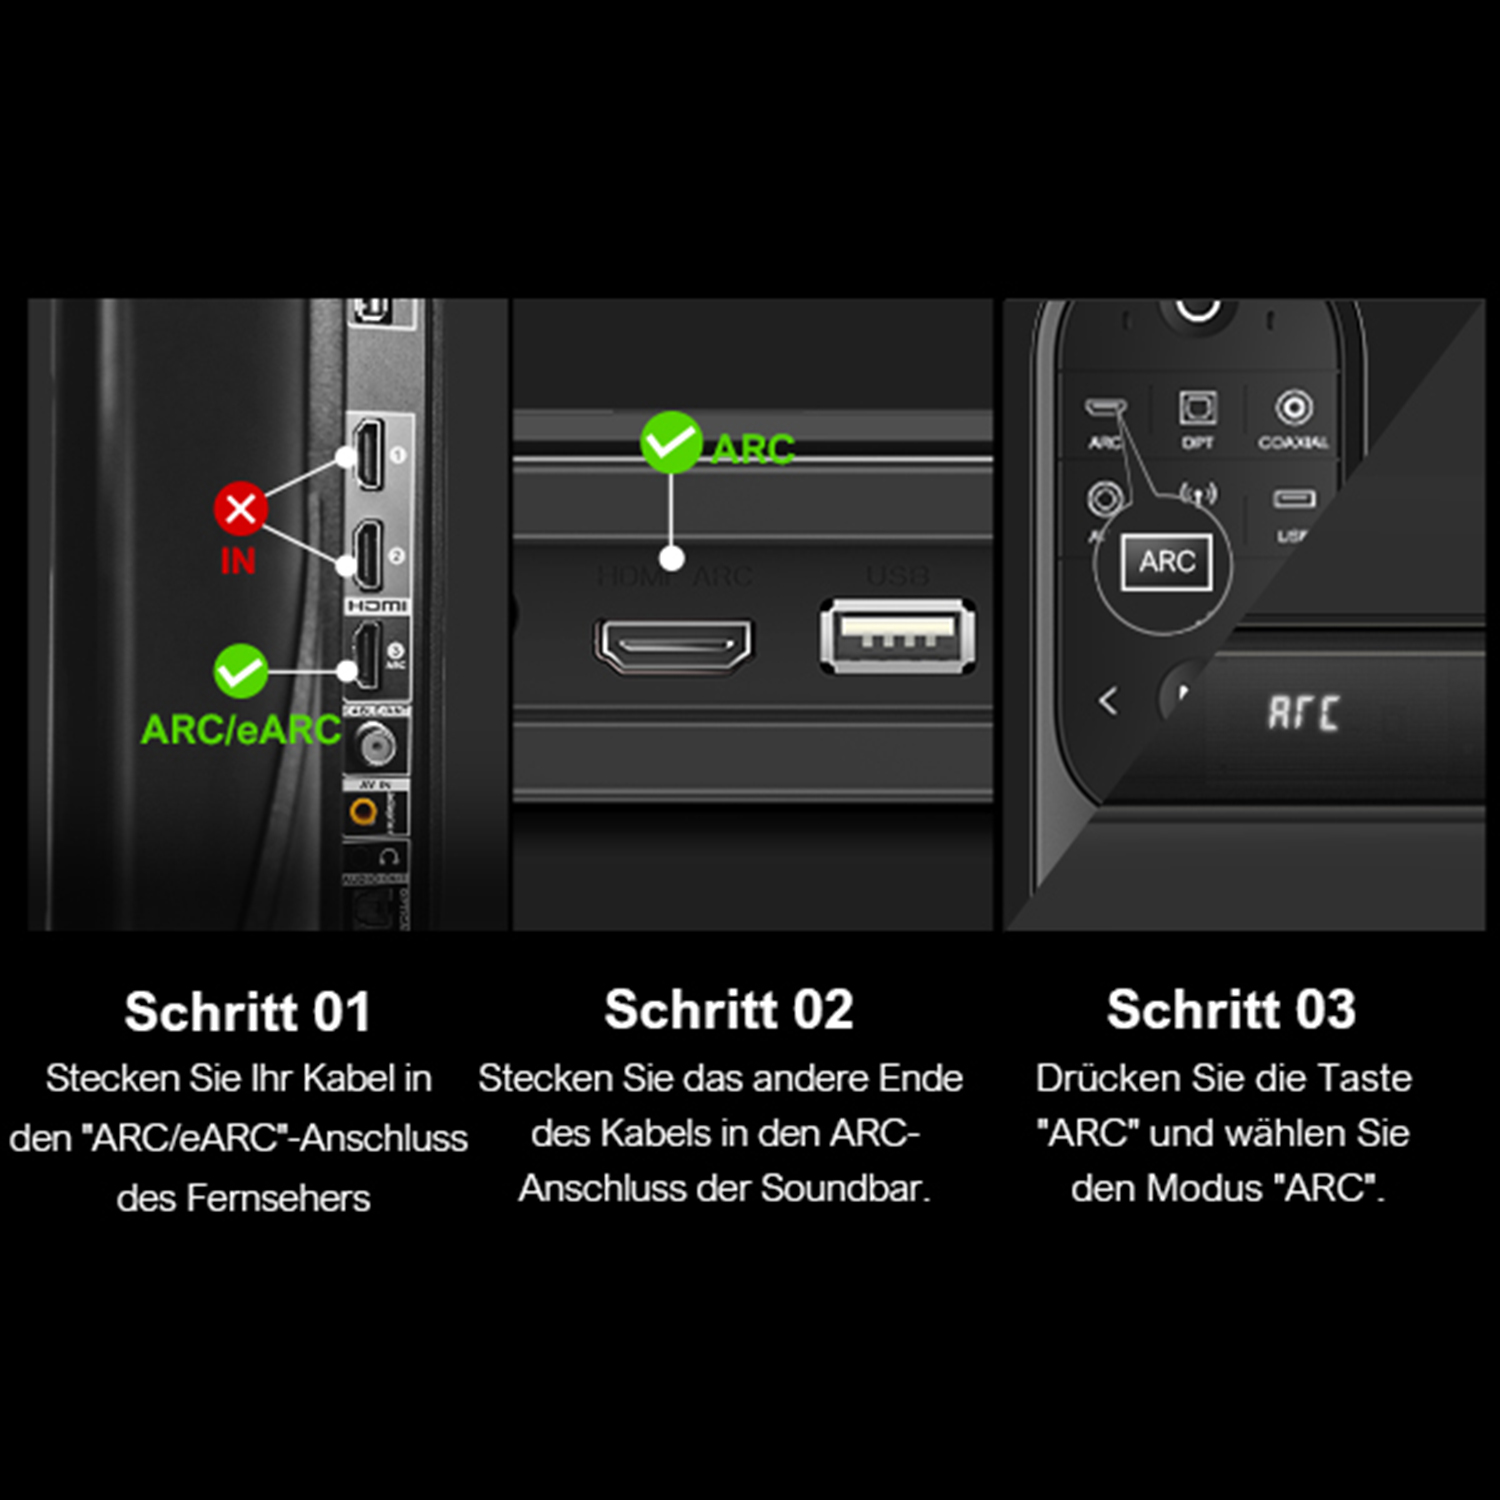 ULTIMEA Nova TV Surround Subwoofer, Soundbar Bass - Verbessert mit 2.1 Lautsprecher, S40 Soundbar mit Subwoofer, schwarz PC